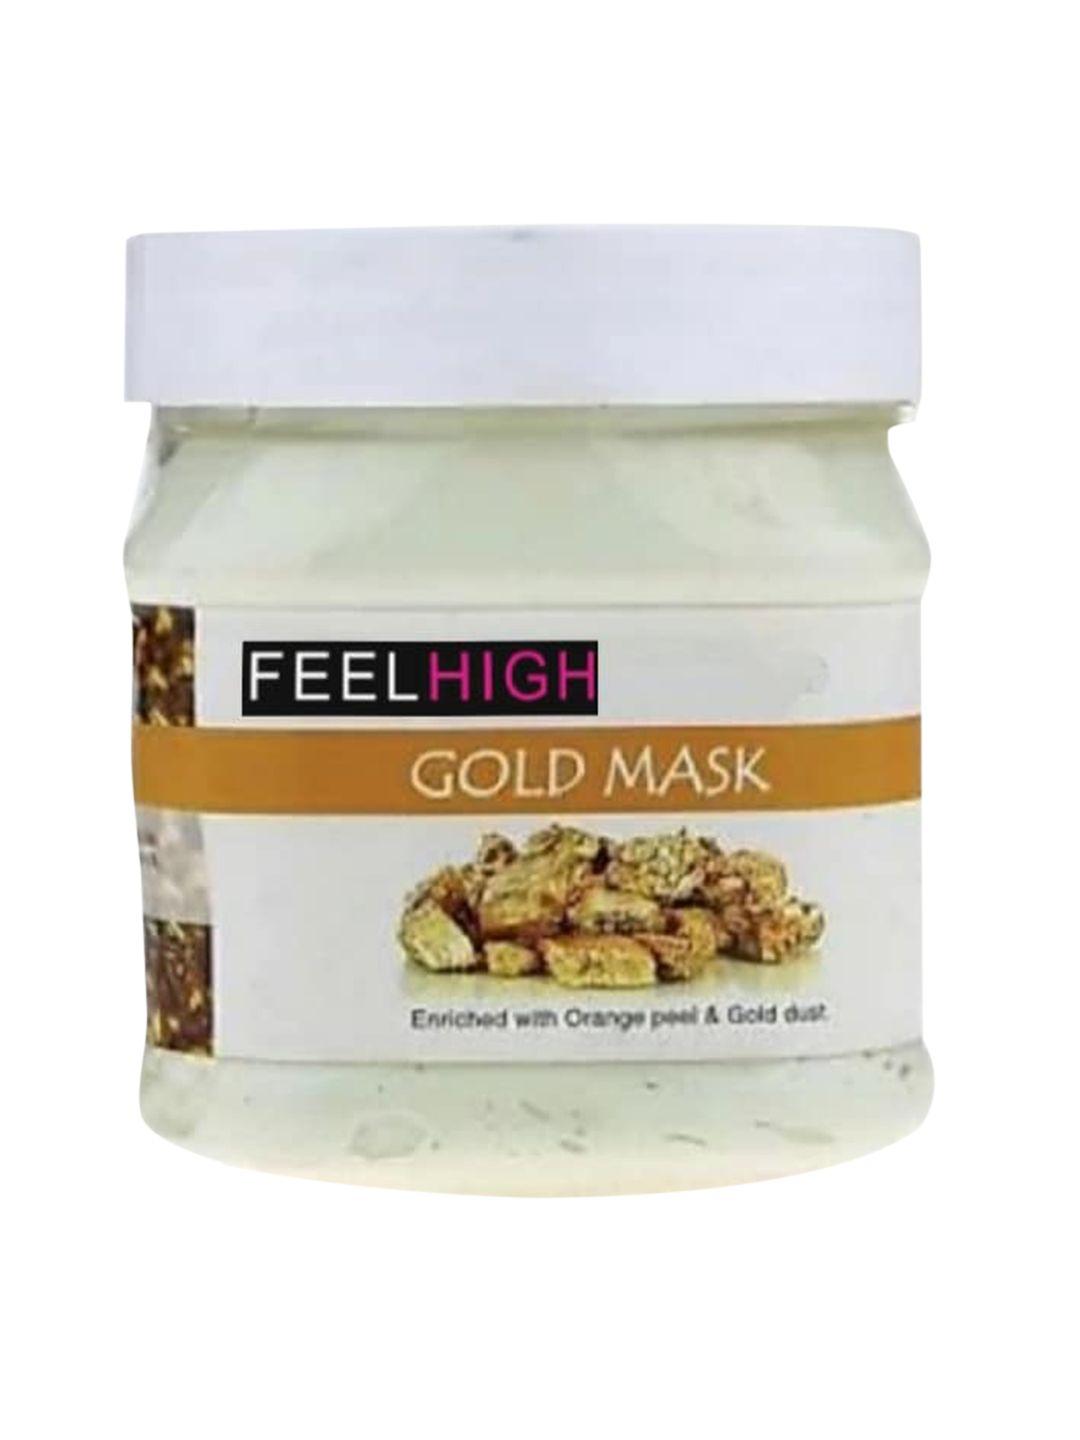 feelhigh gold shiny skin brightening mask with orange peel & gold dust - 500ml